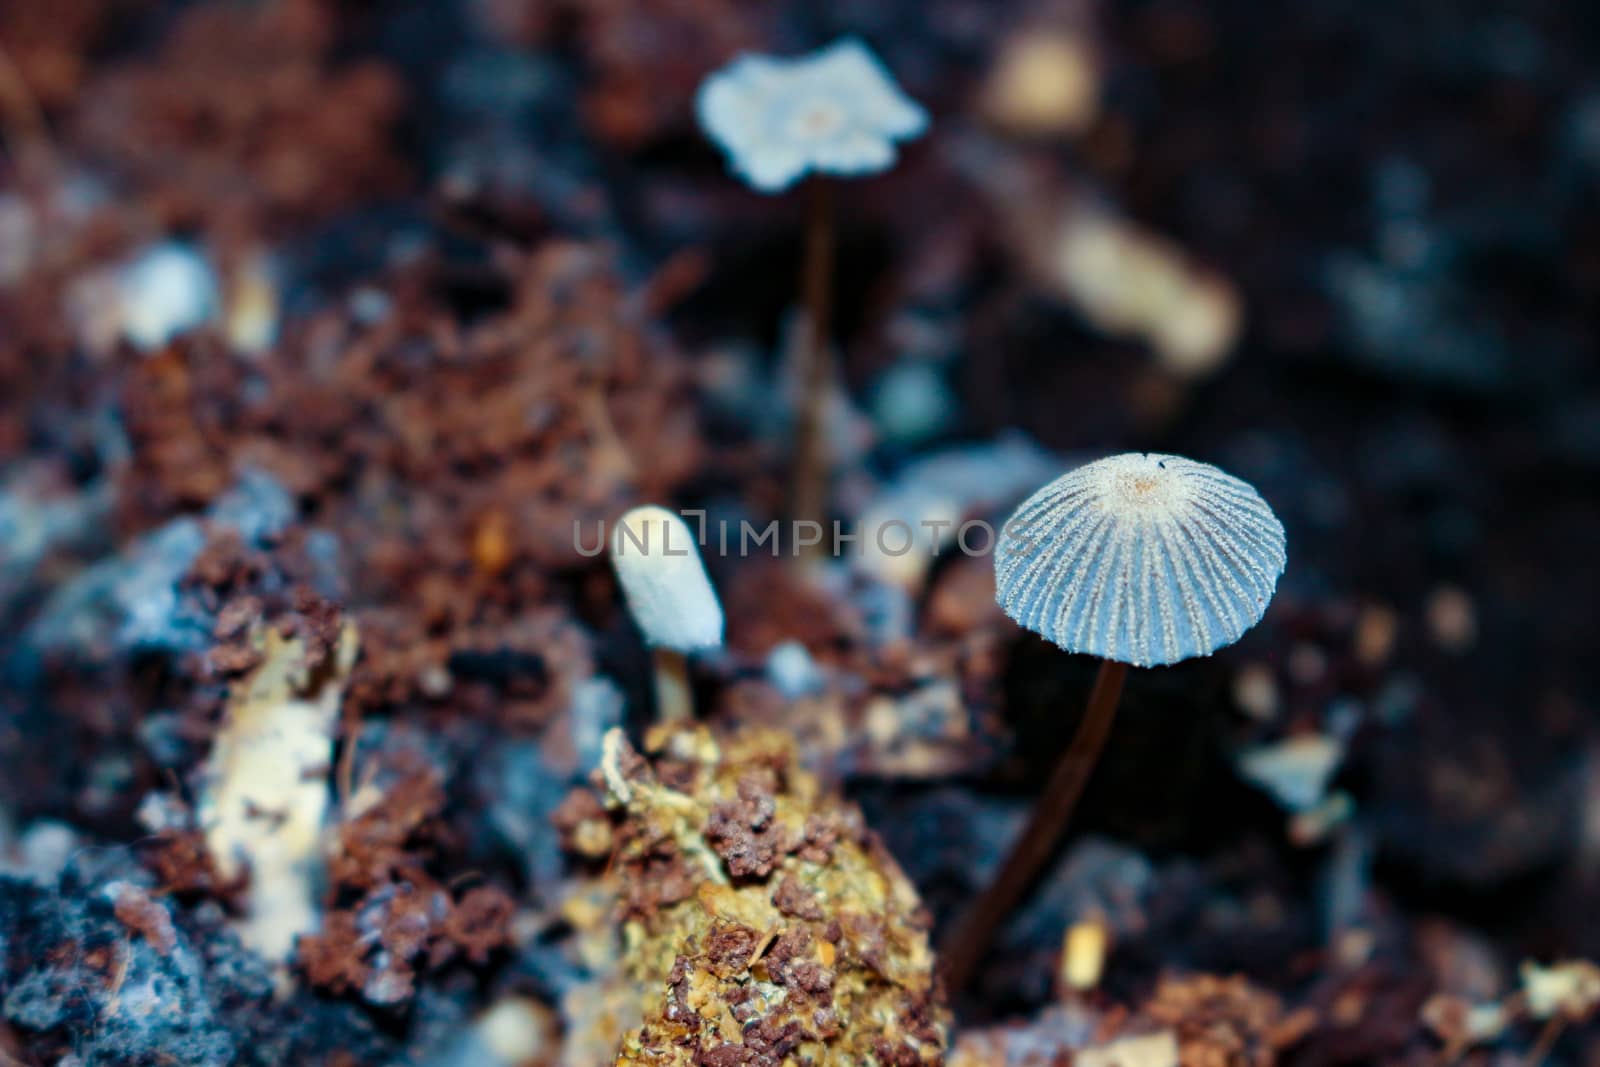 parasola auricoma mushrooms in the compost bin